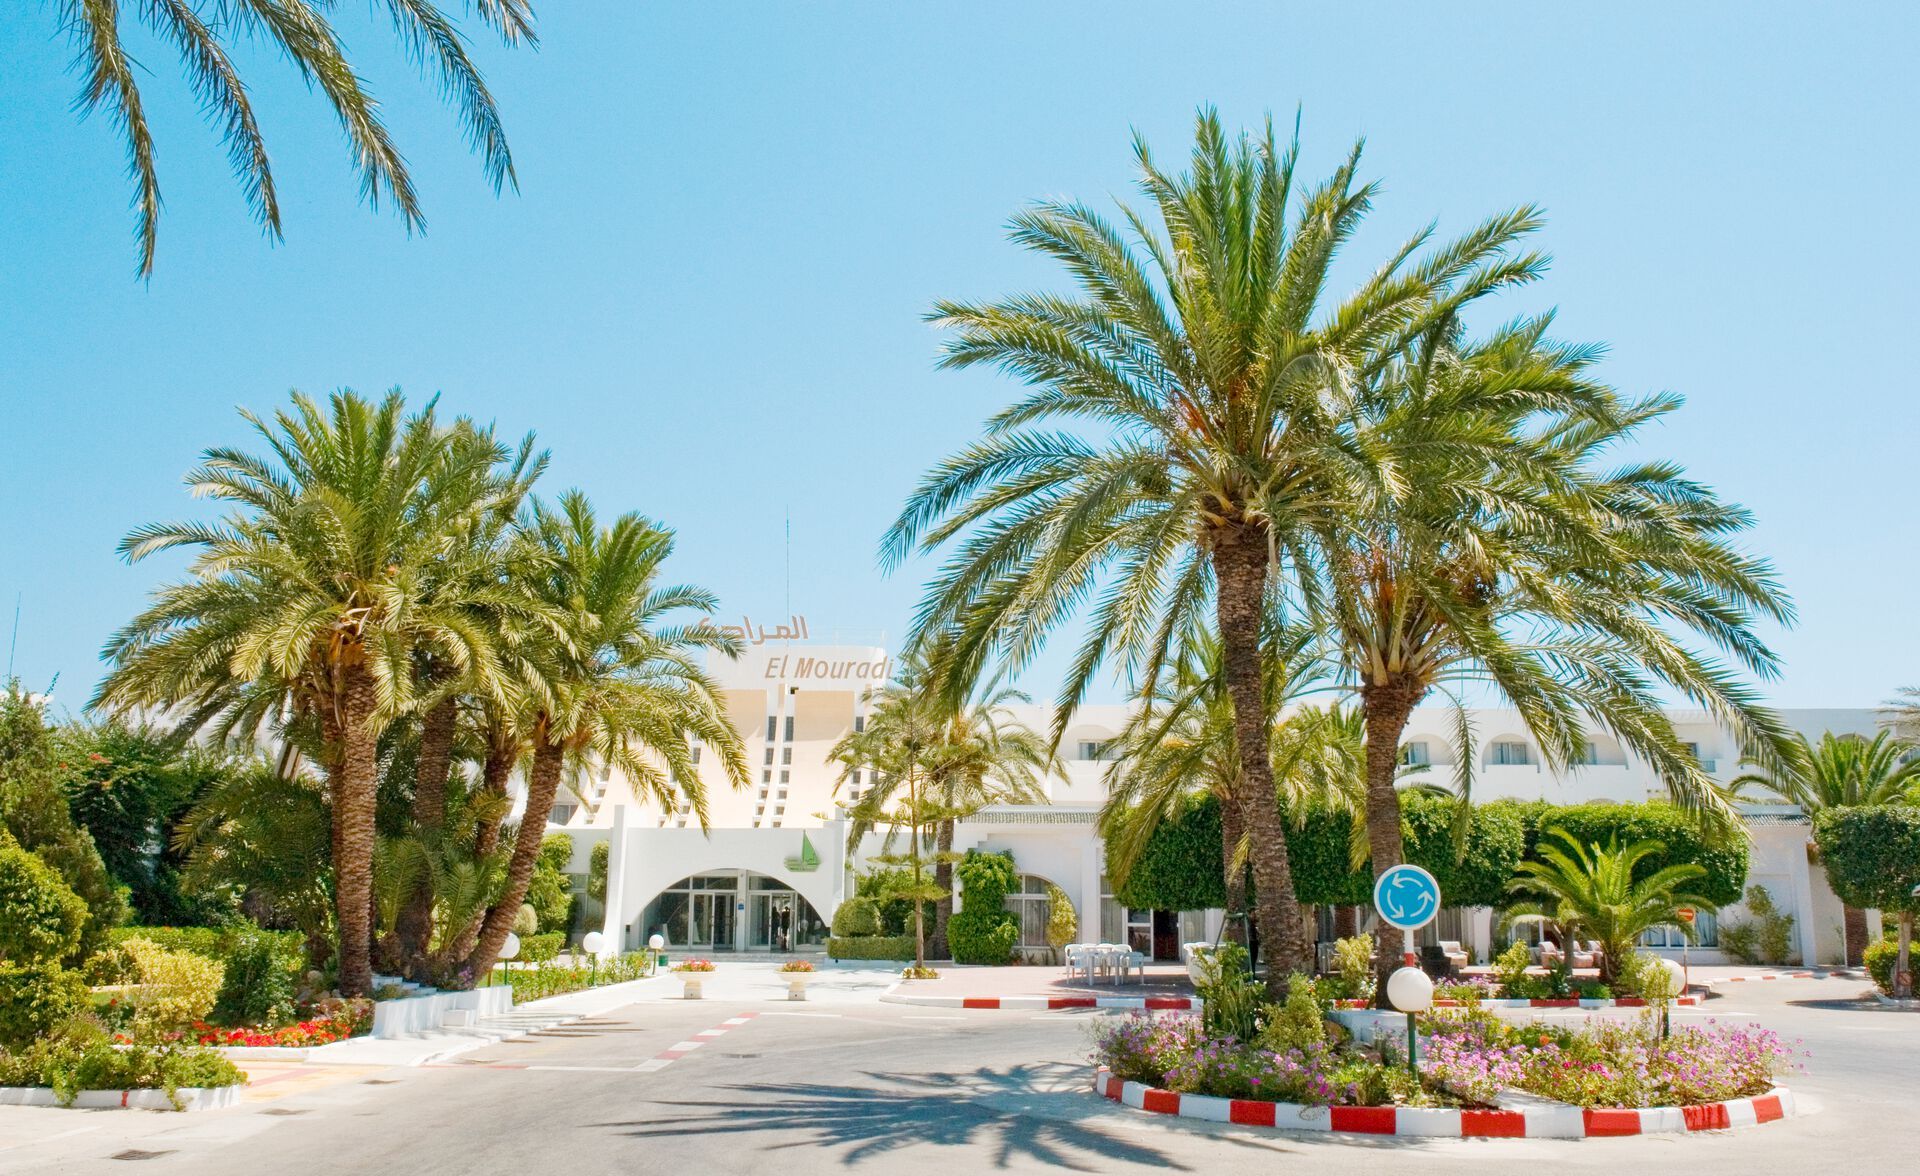 Tunisie - Monastir - Hôtel El Mouradi Port El Kantaoui 4*